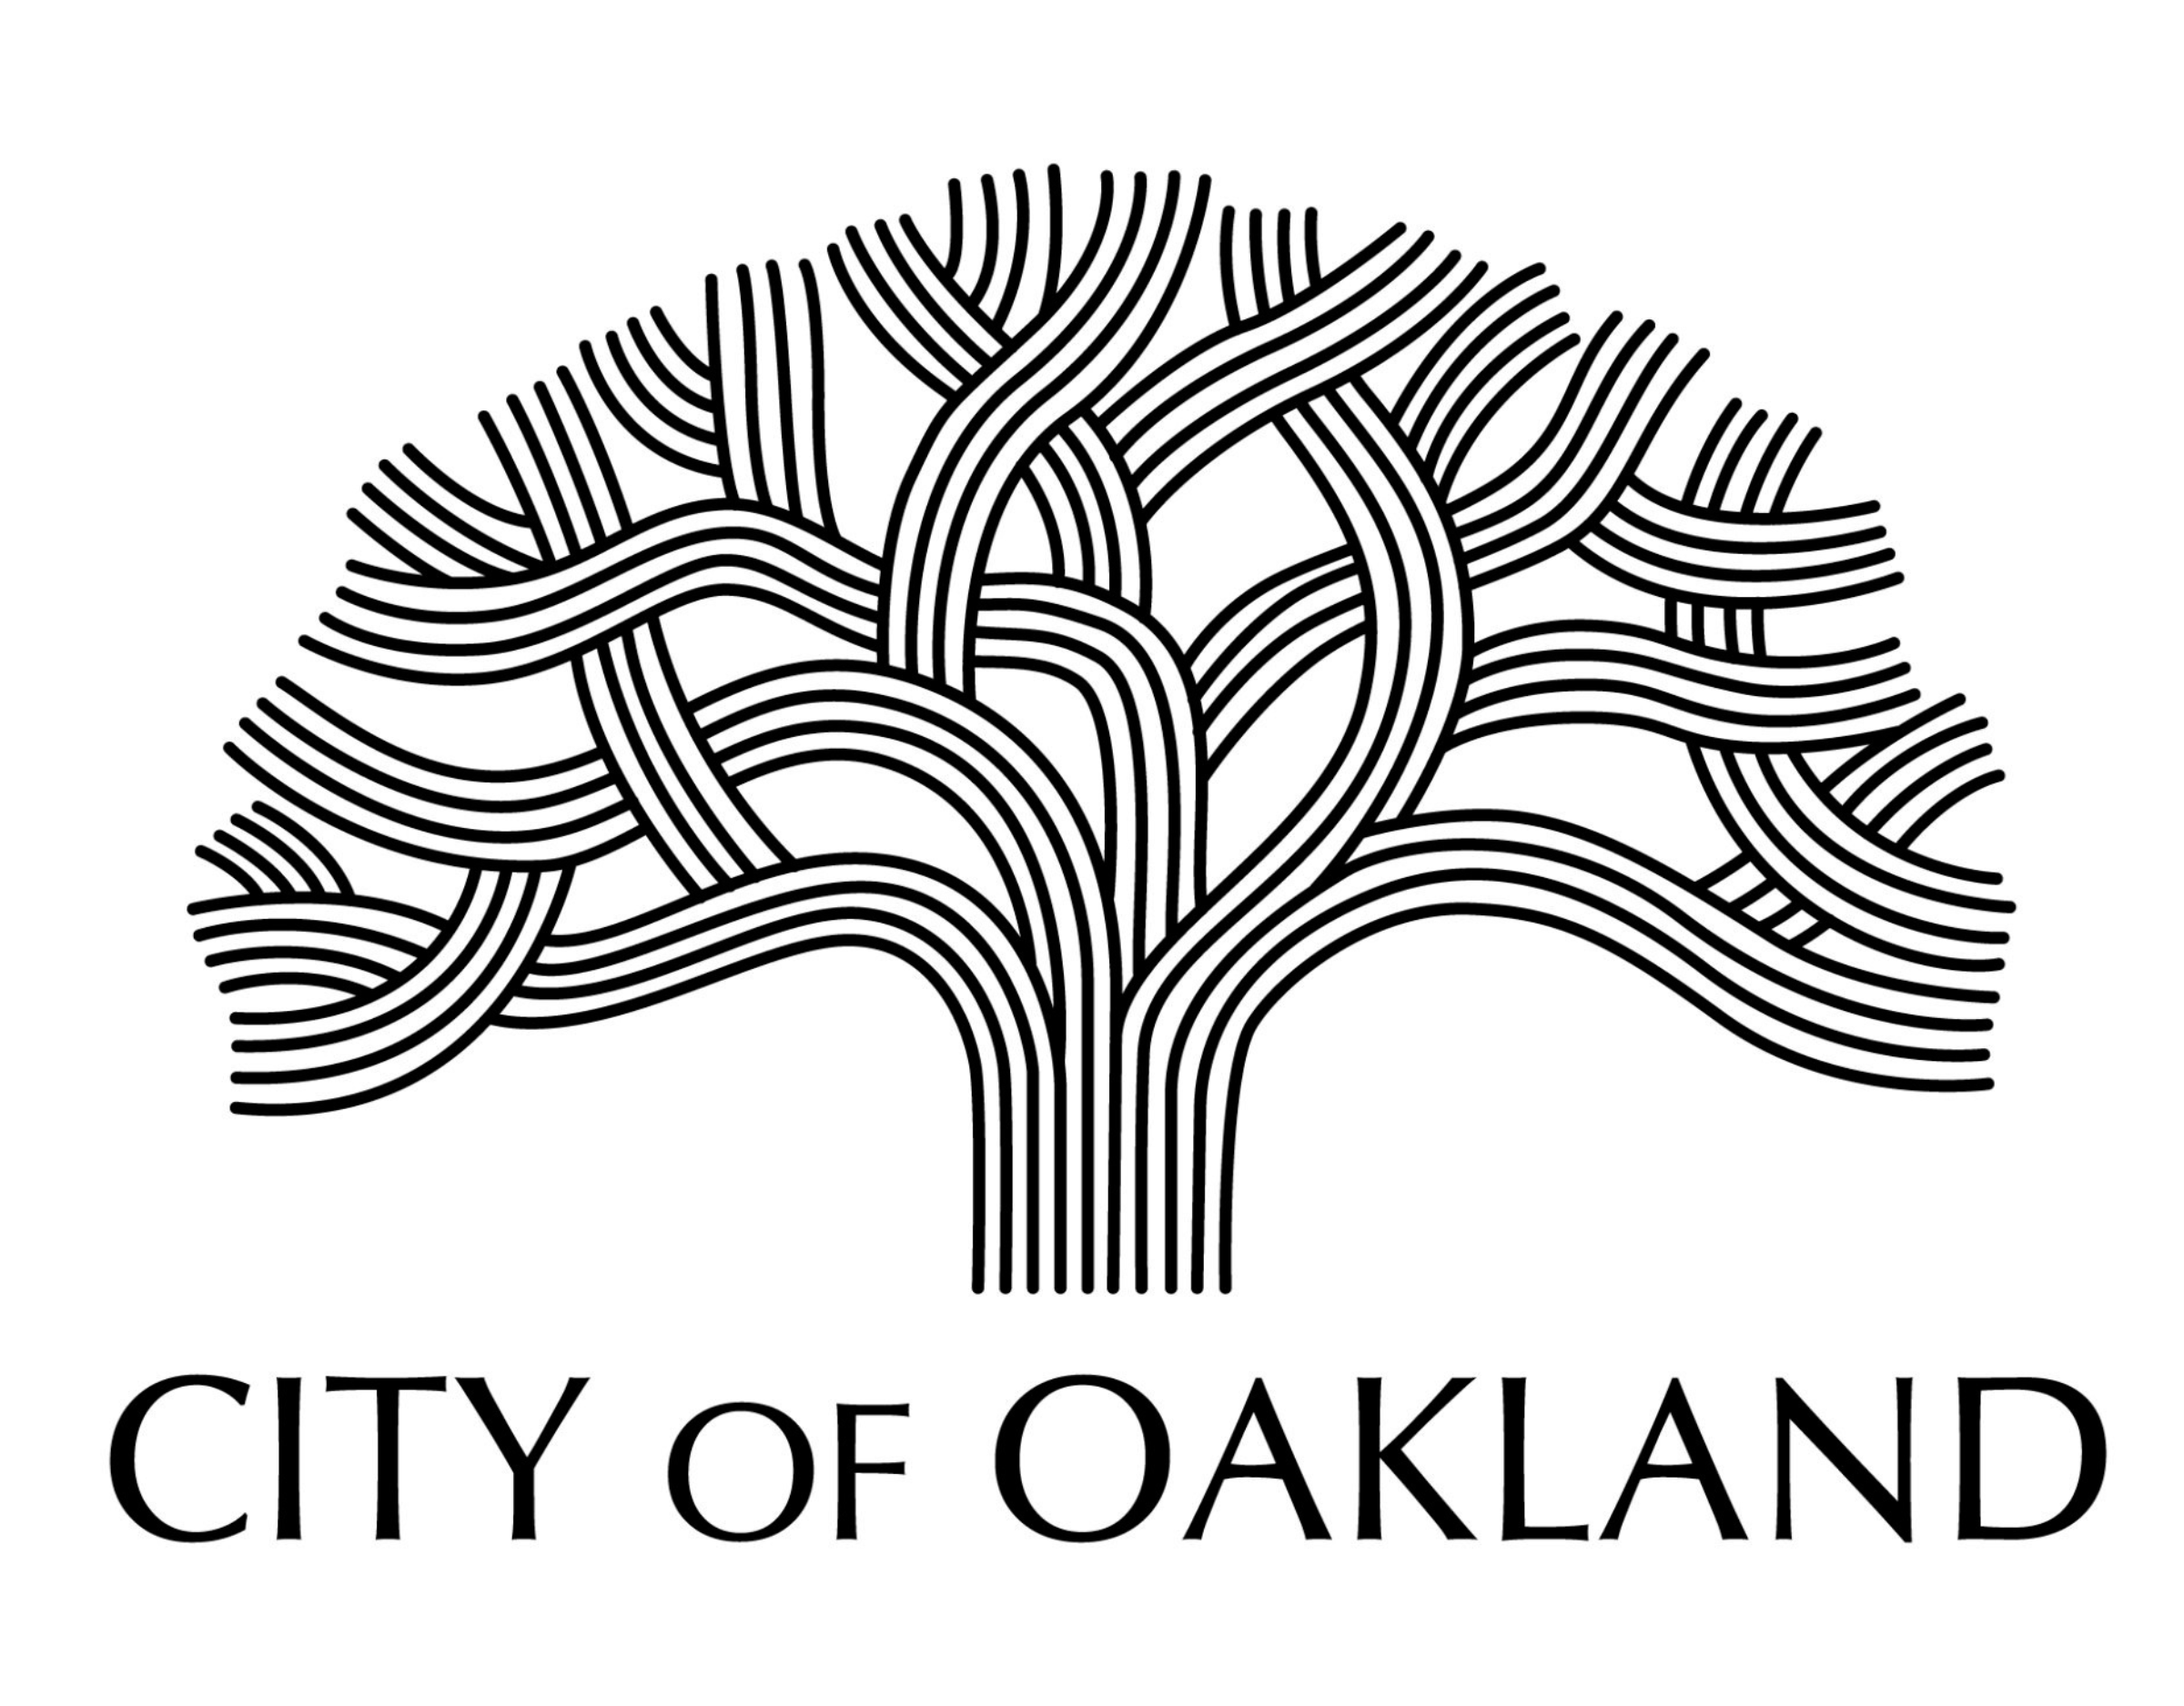 The flag of Oakland, California, USA